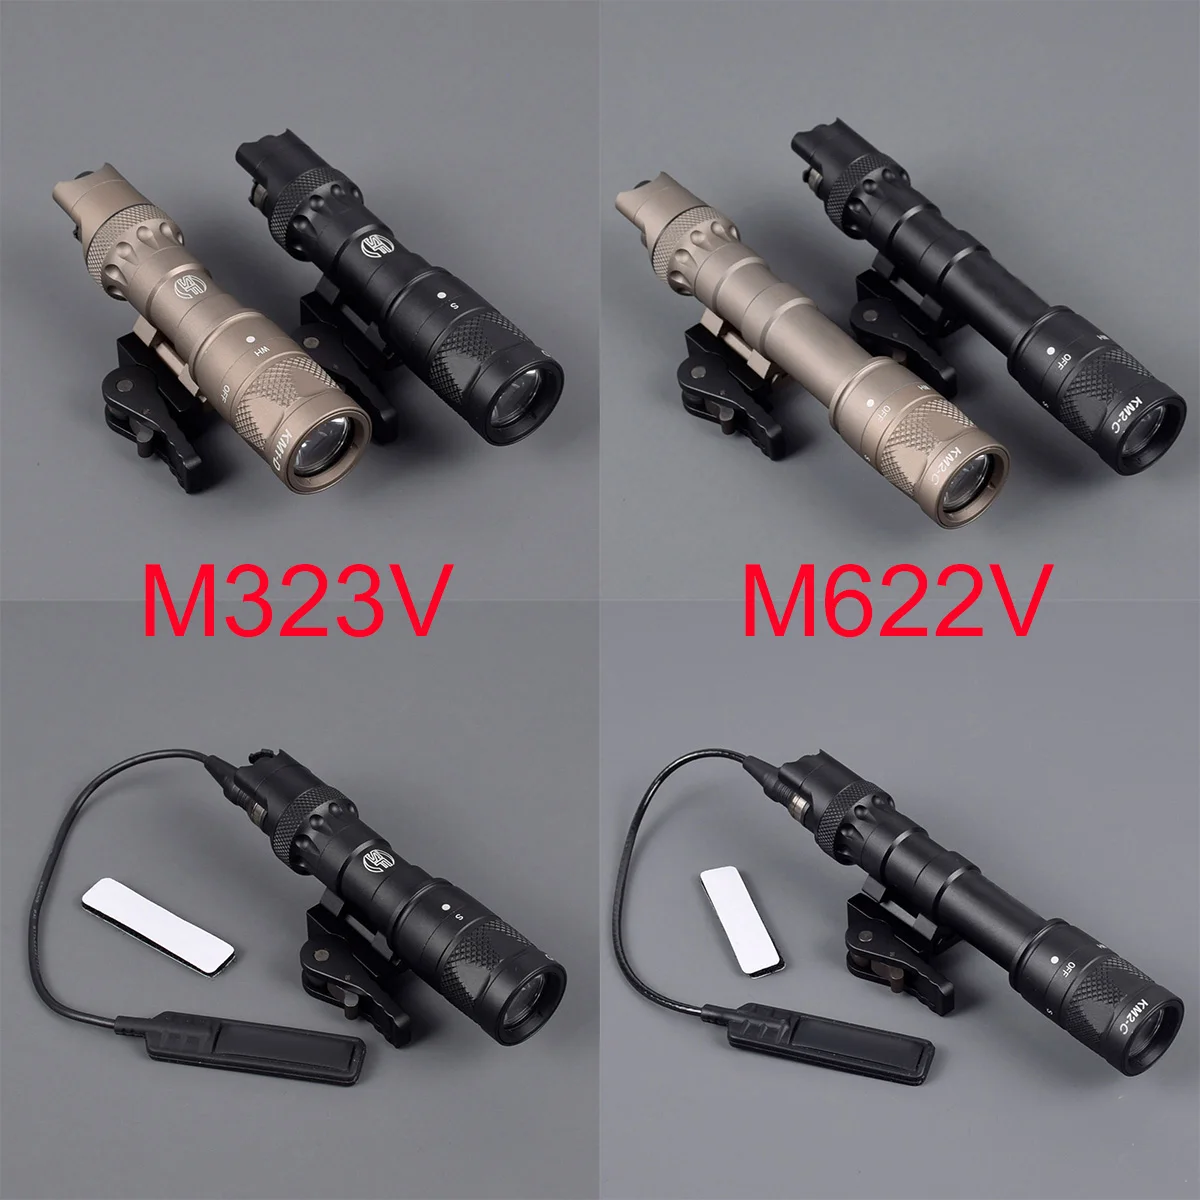 

Tactical SF M300V M600V Upgrade M323V M622V Weapon Gun Light Strobe Flashlight With 20mm QD Mount For Airsoft Hunting Lanterna